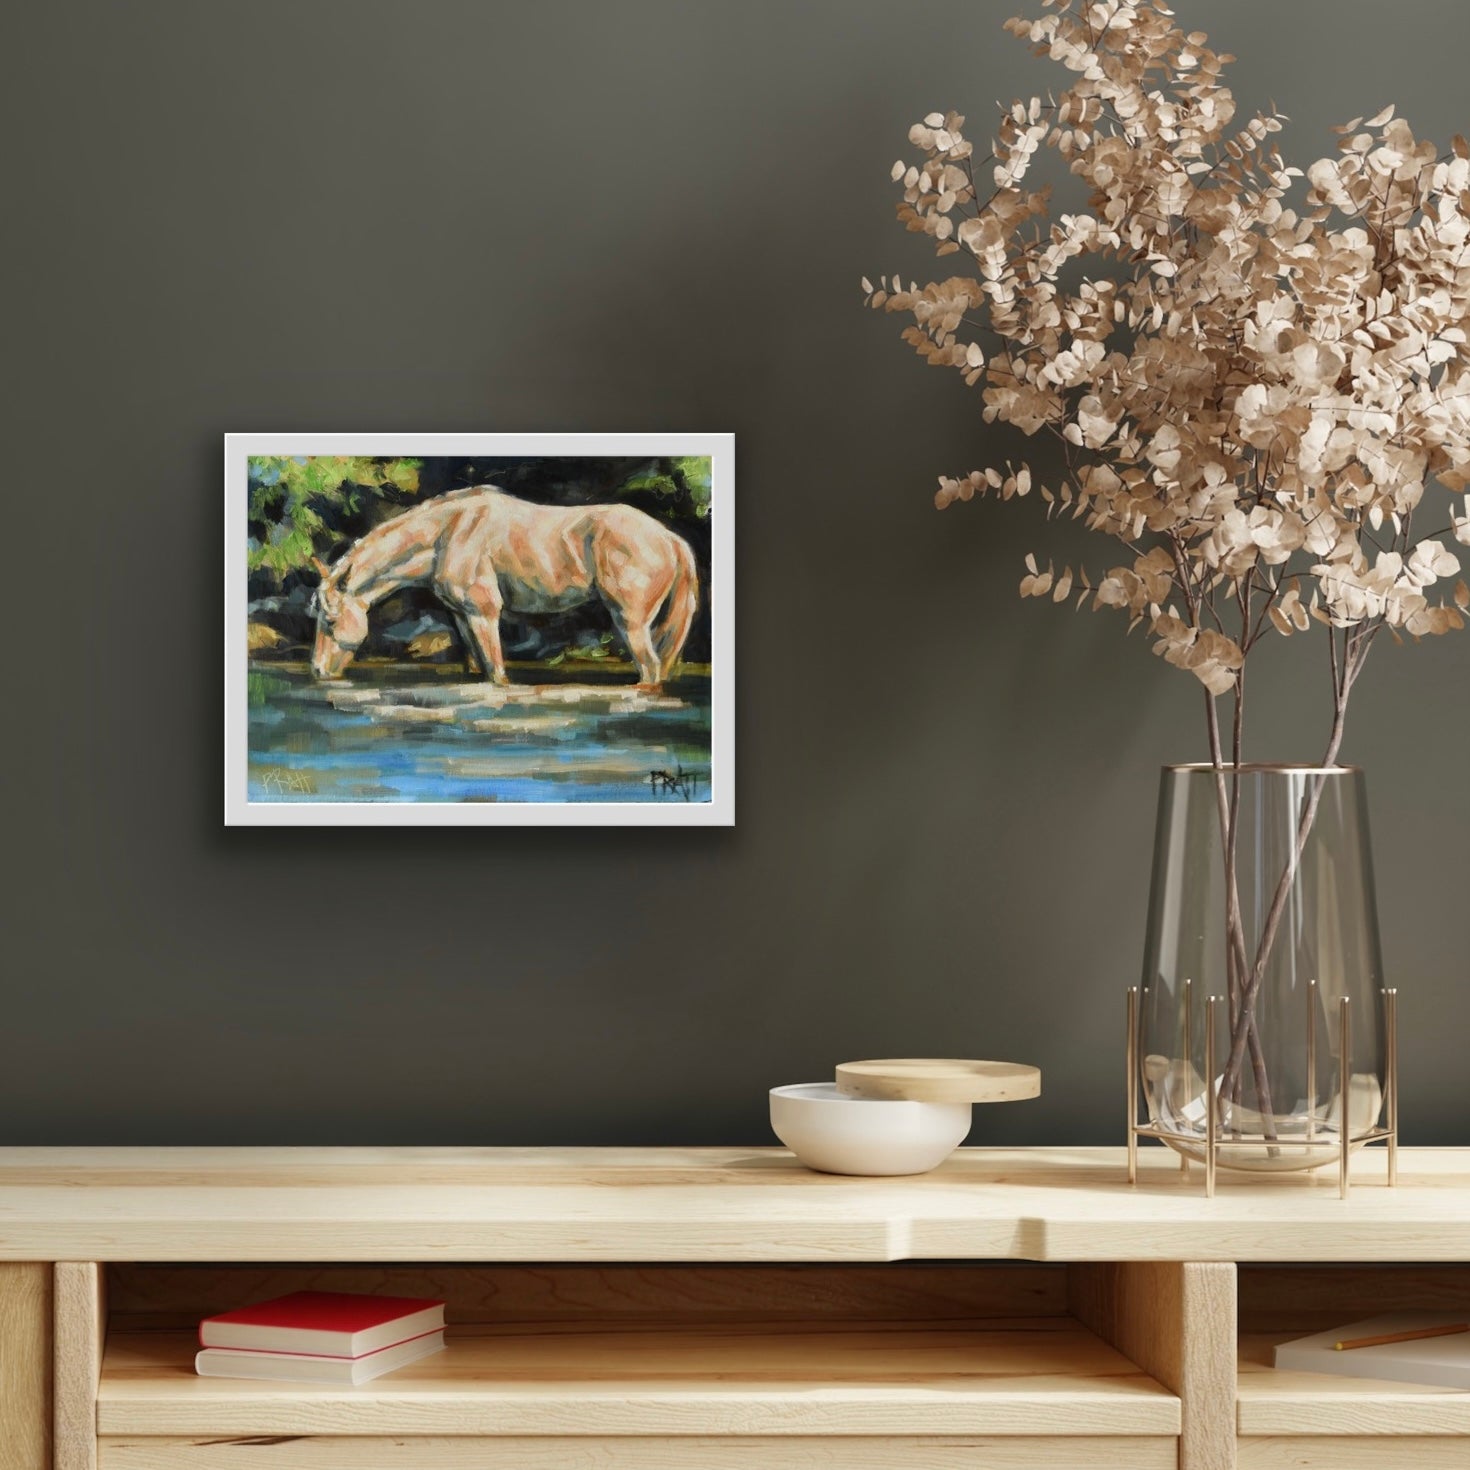 Roan by the River - Original Art - Jennifer Pratt Artist - Shop equestrian art, horse paintings and horse portraits